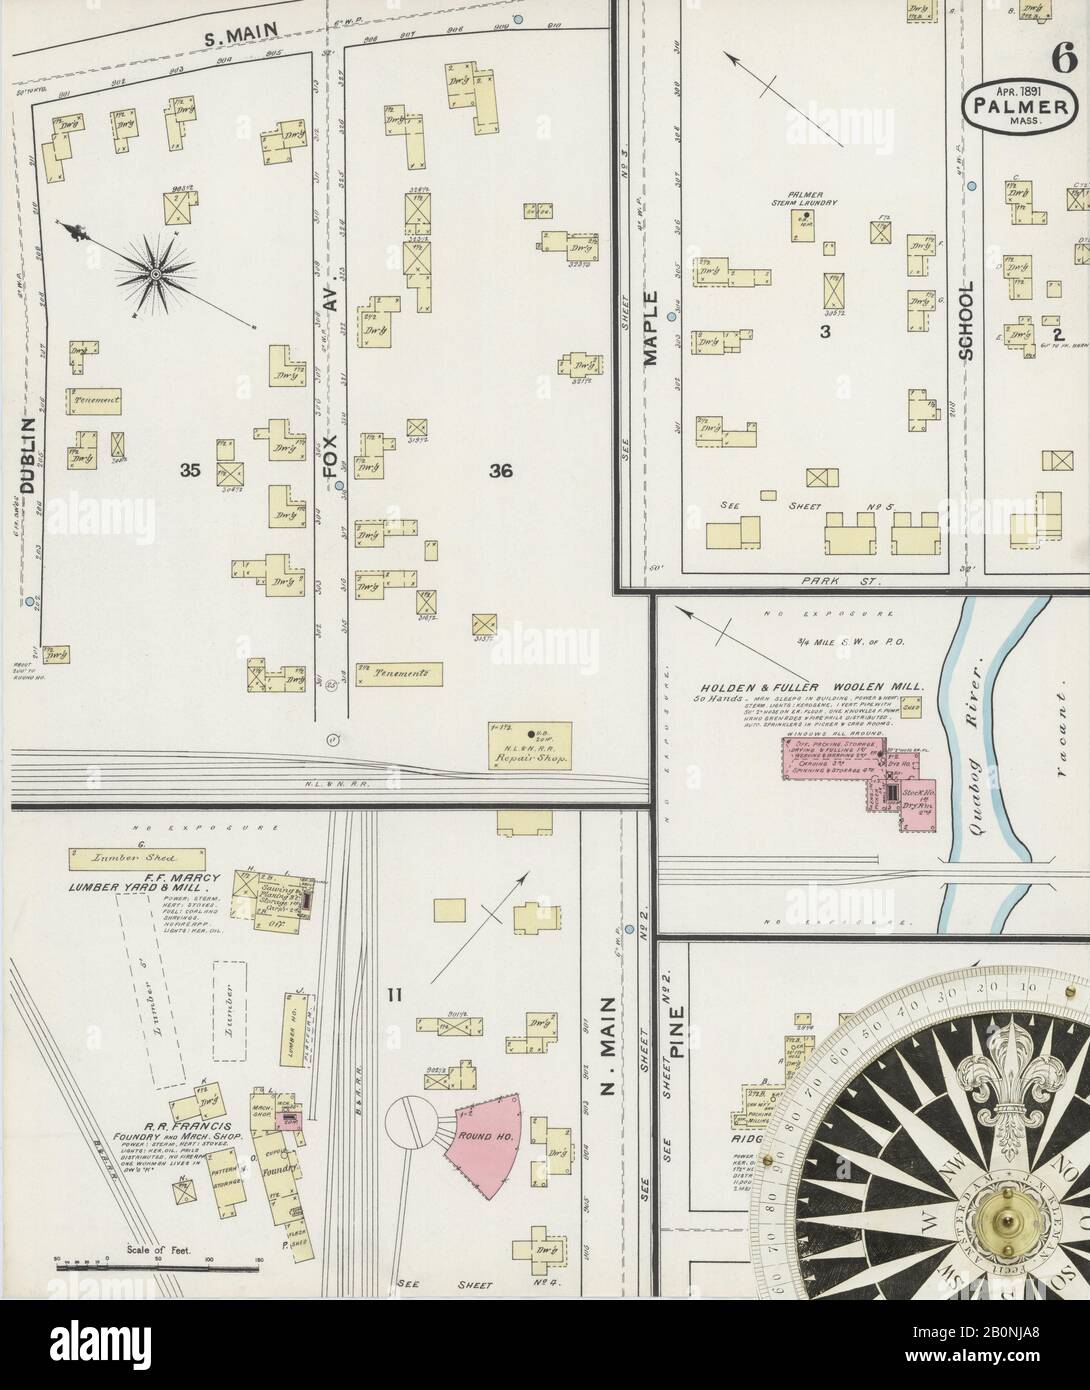 Bild 6 von Sanborn Fire Insurance Map aus Palmer, Hampden County, Massachusetts. Apr. 6 Blatt(e), Amerika, Straßenkarte mit einem Kompass Aus Dem 19. Jahrhundert Stockfoto